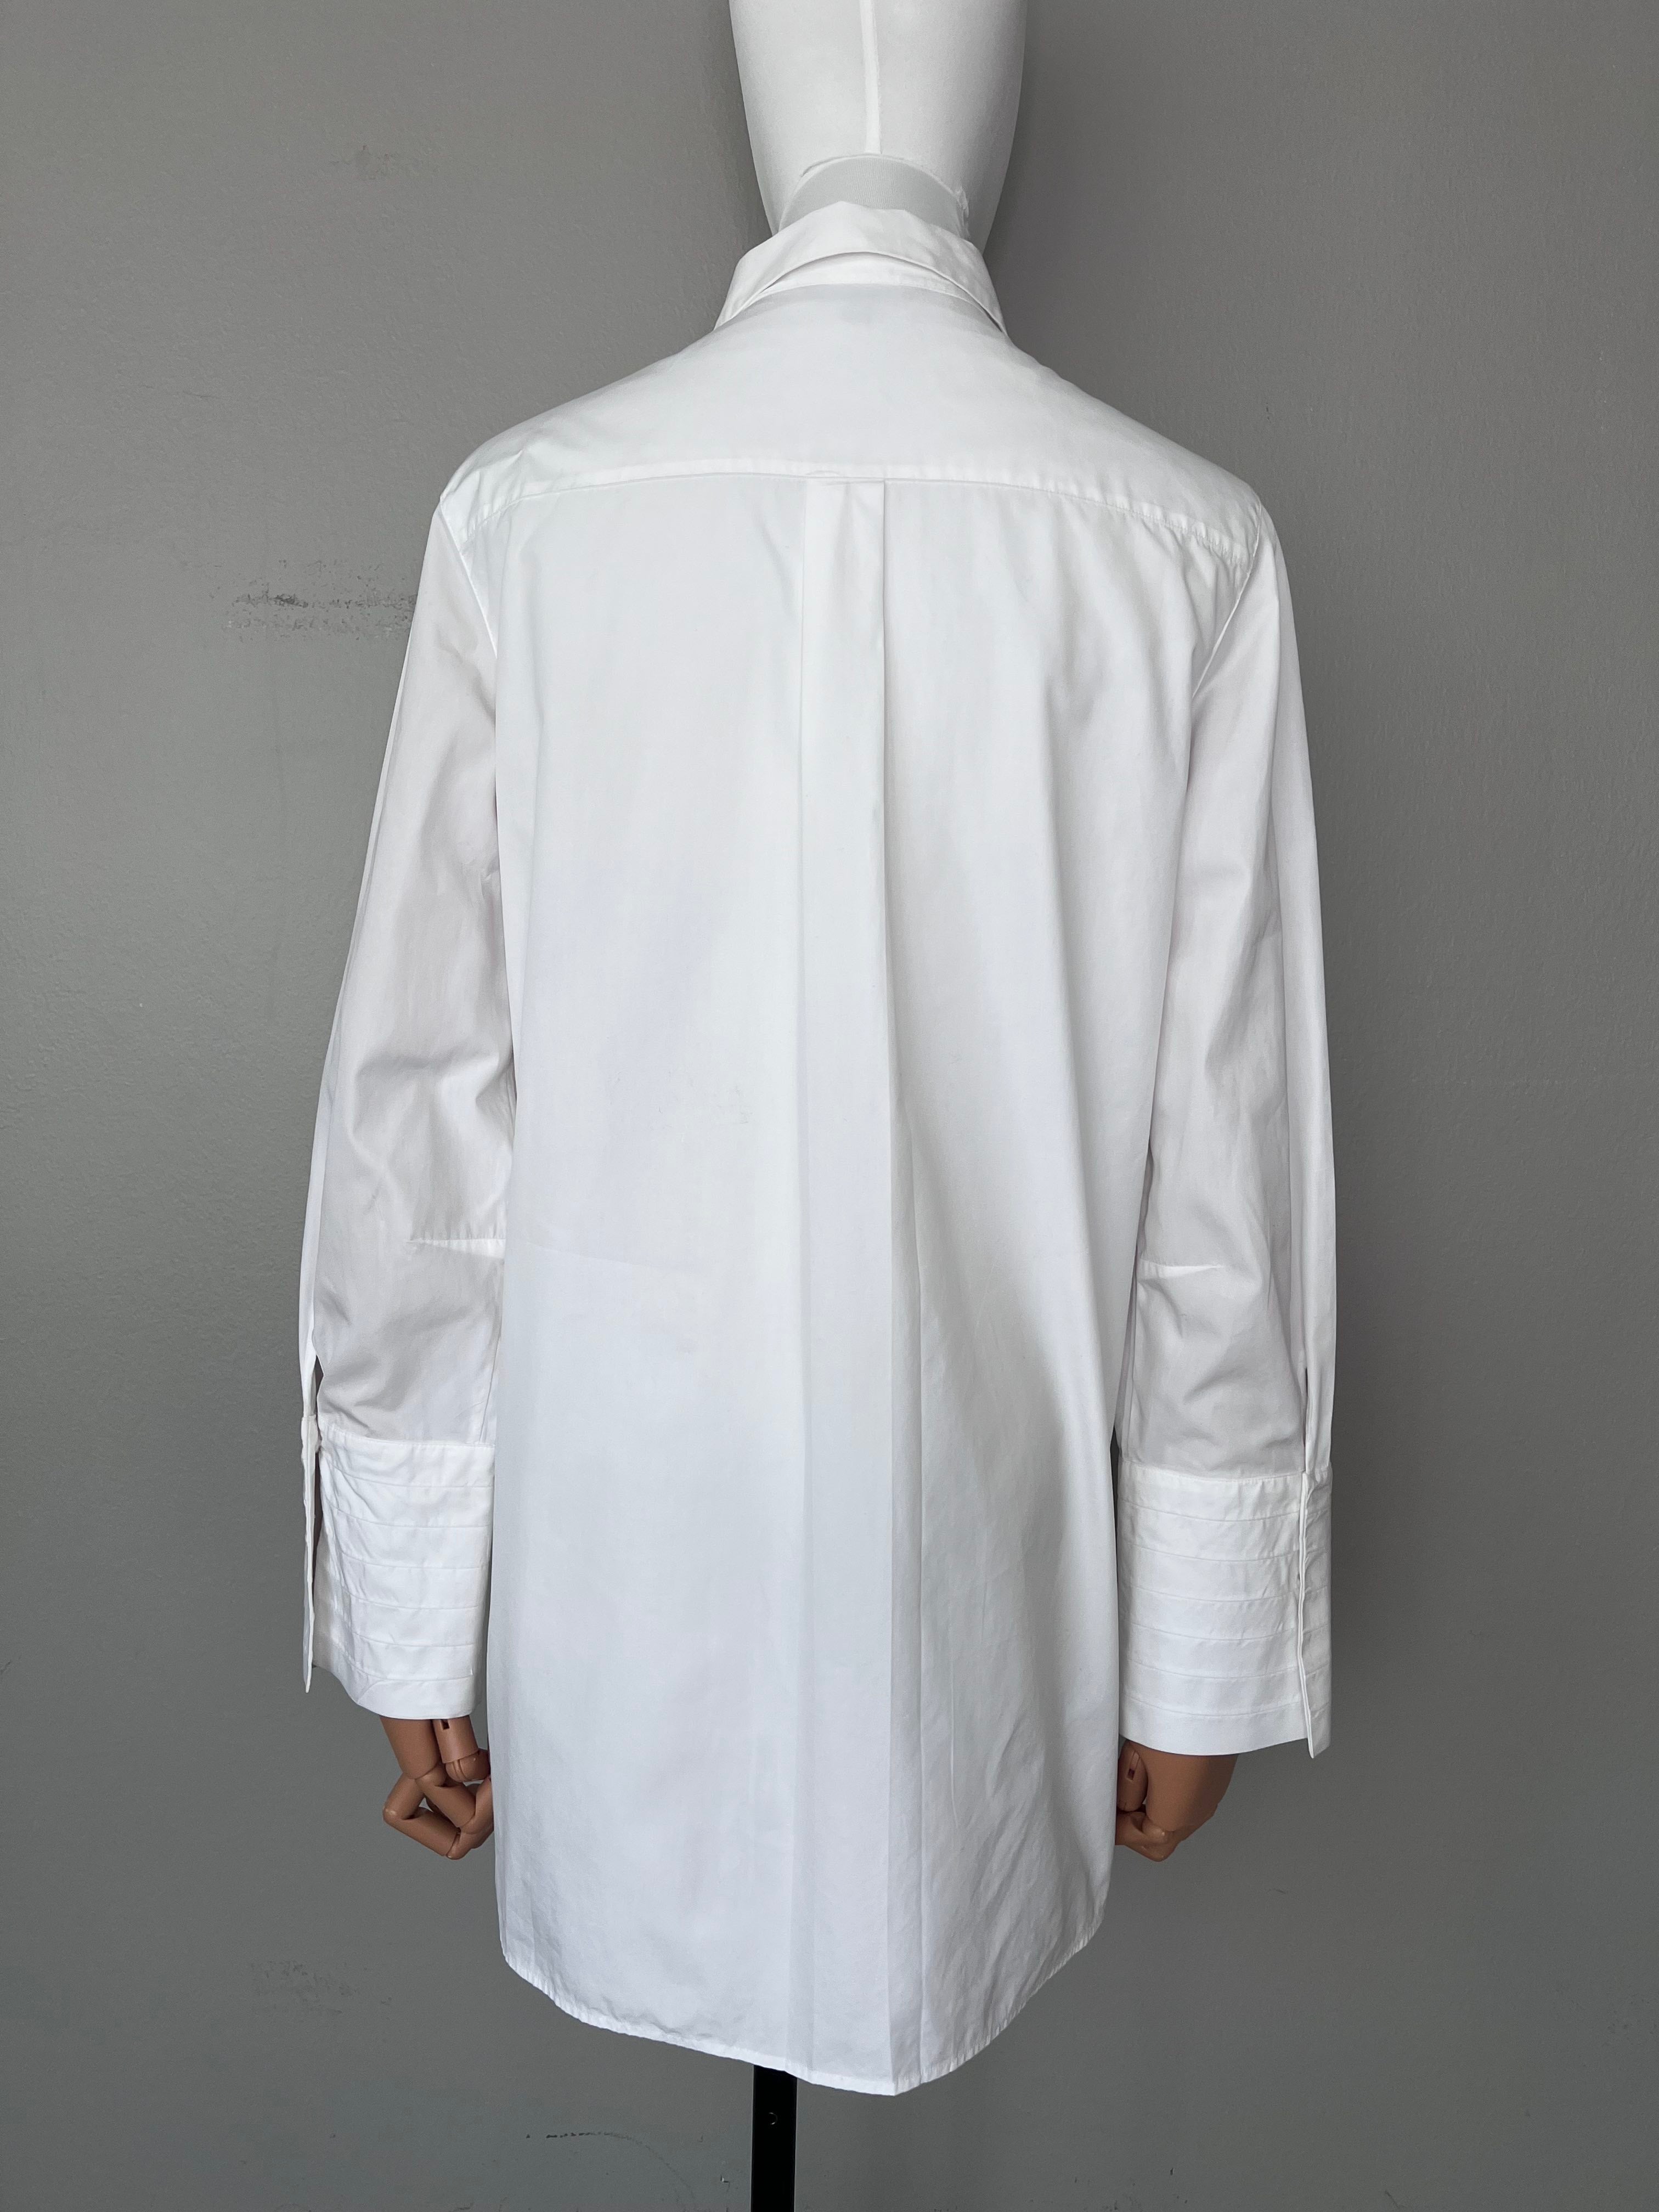 White shirt with pattern sleeve - MASSIMO DUTTI